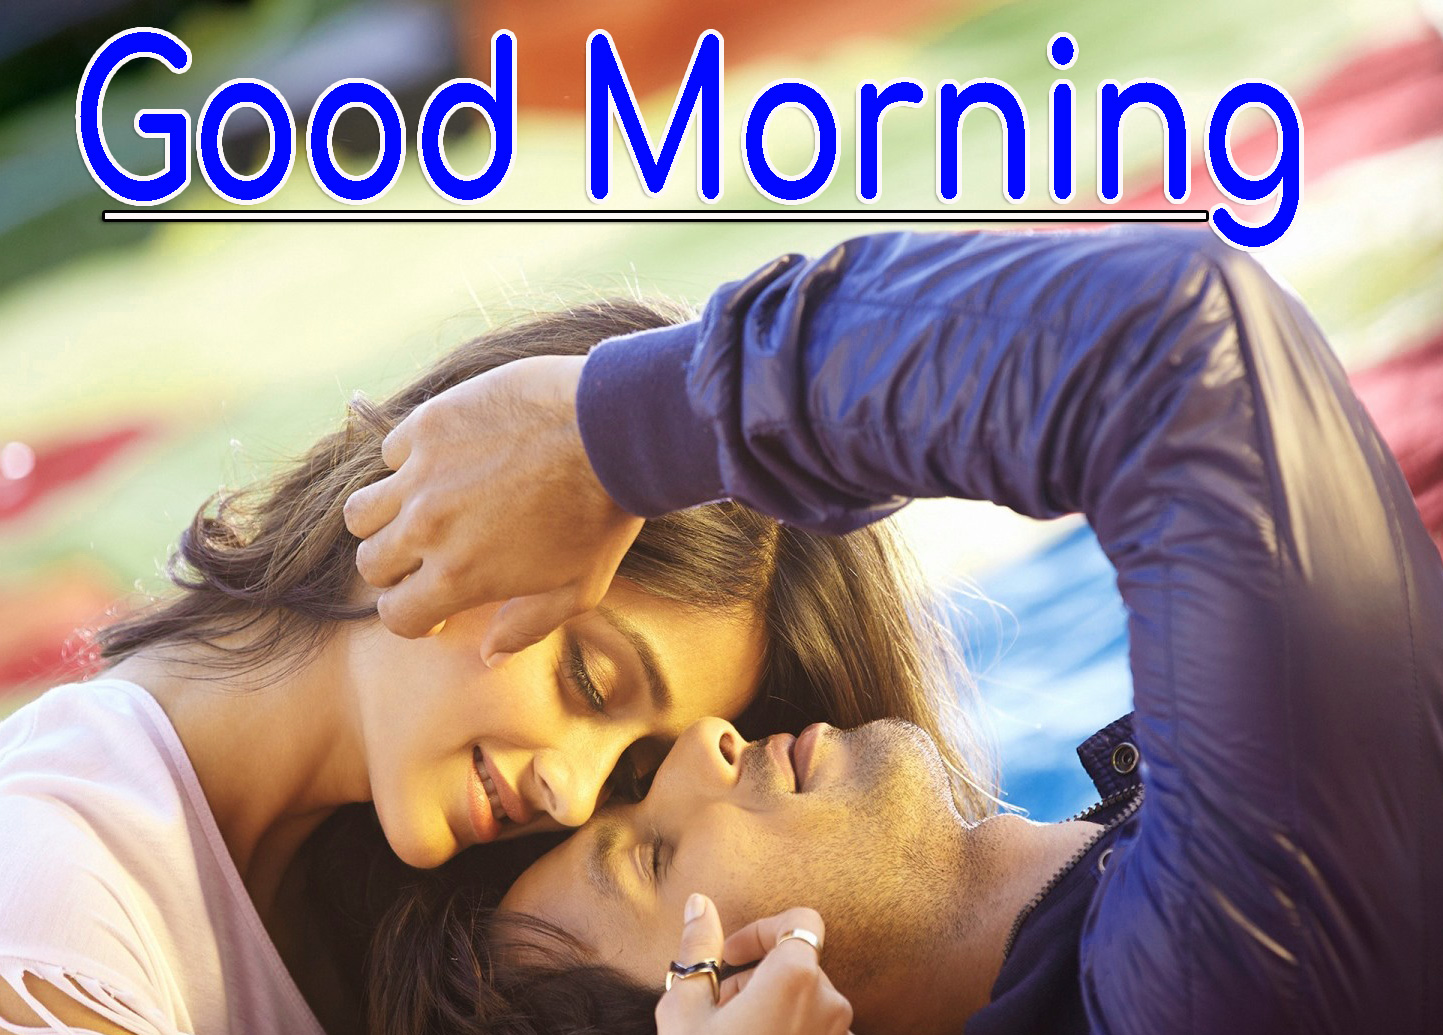 Lover Good Morning Images Wallpaper for Facebook